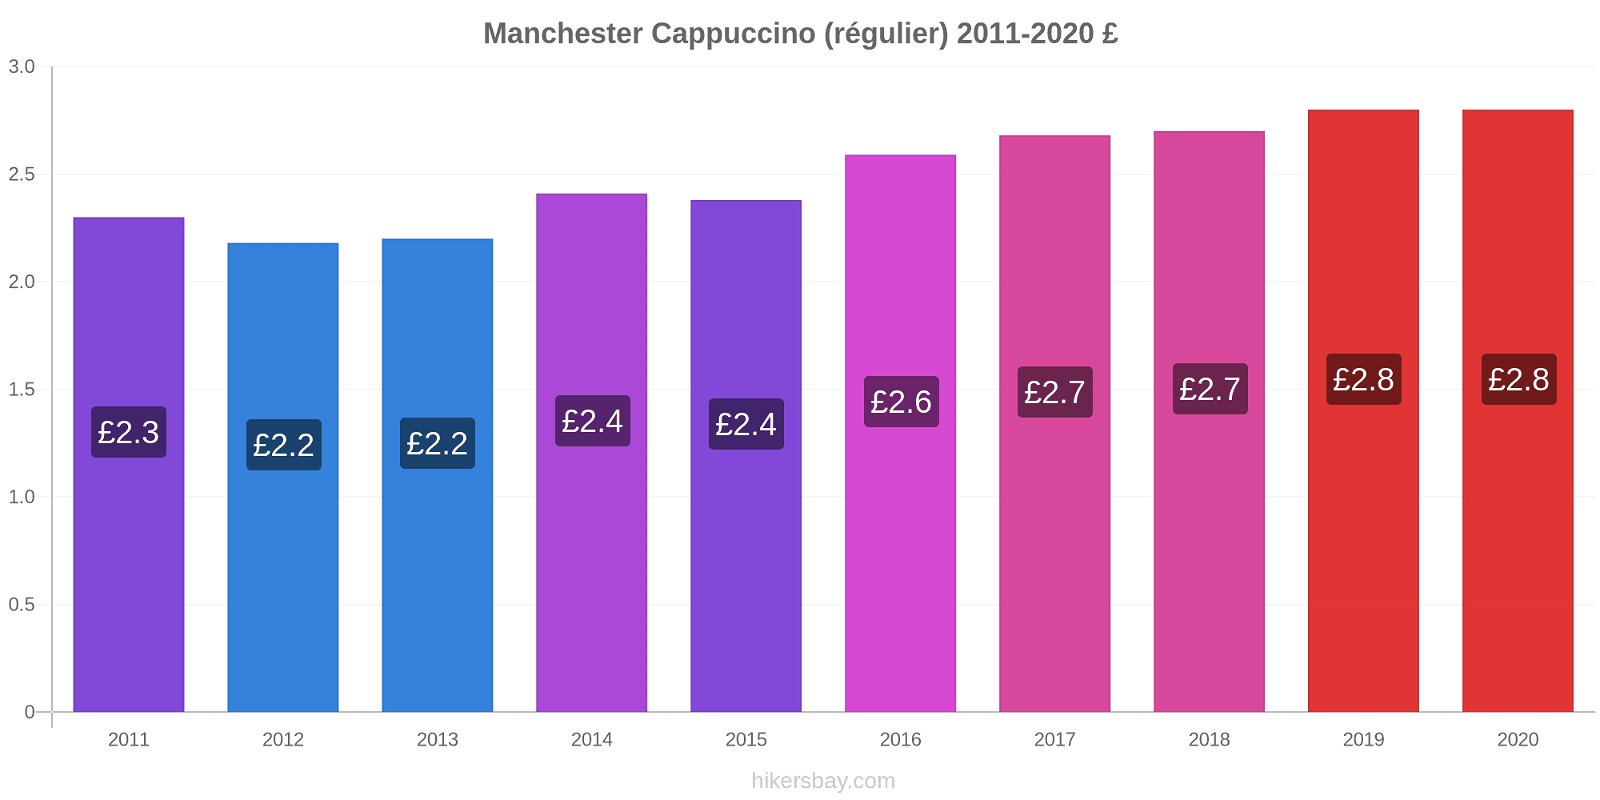 Manchester changements de prix Cappuccino (régulier) hikersbay.com